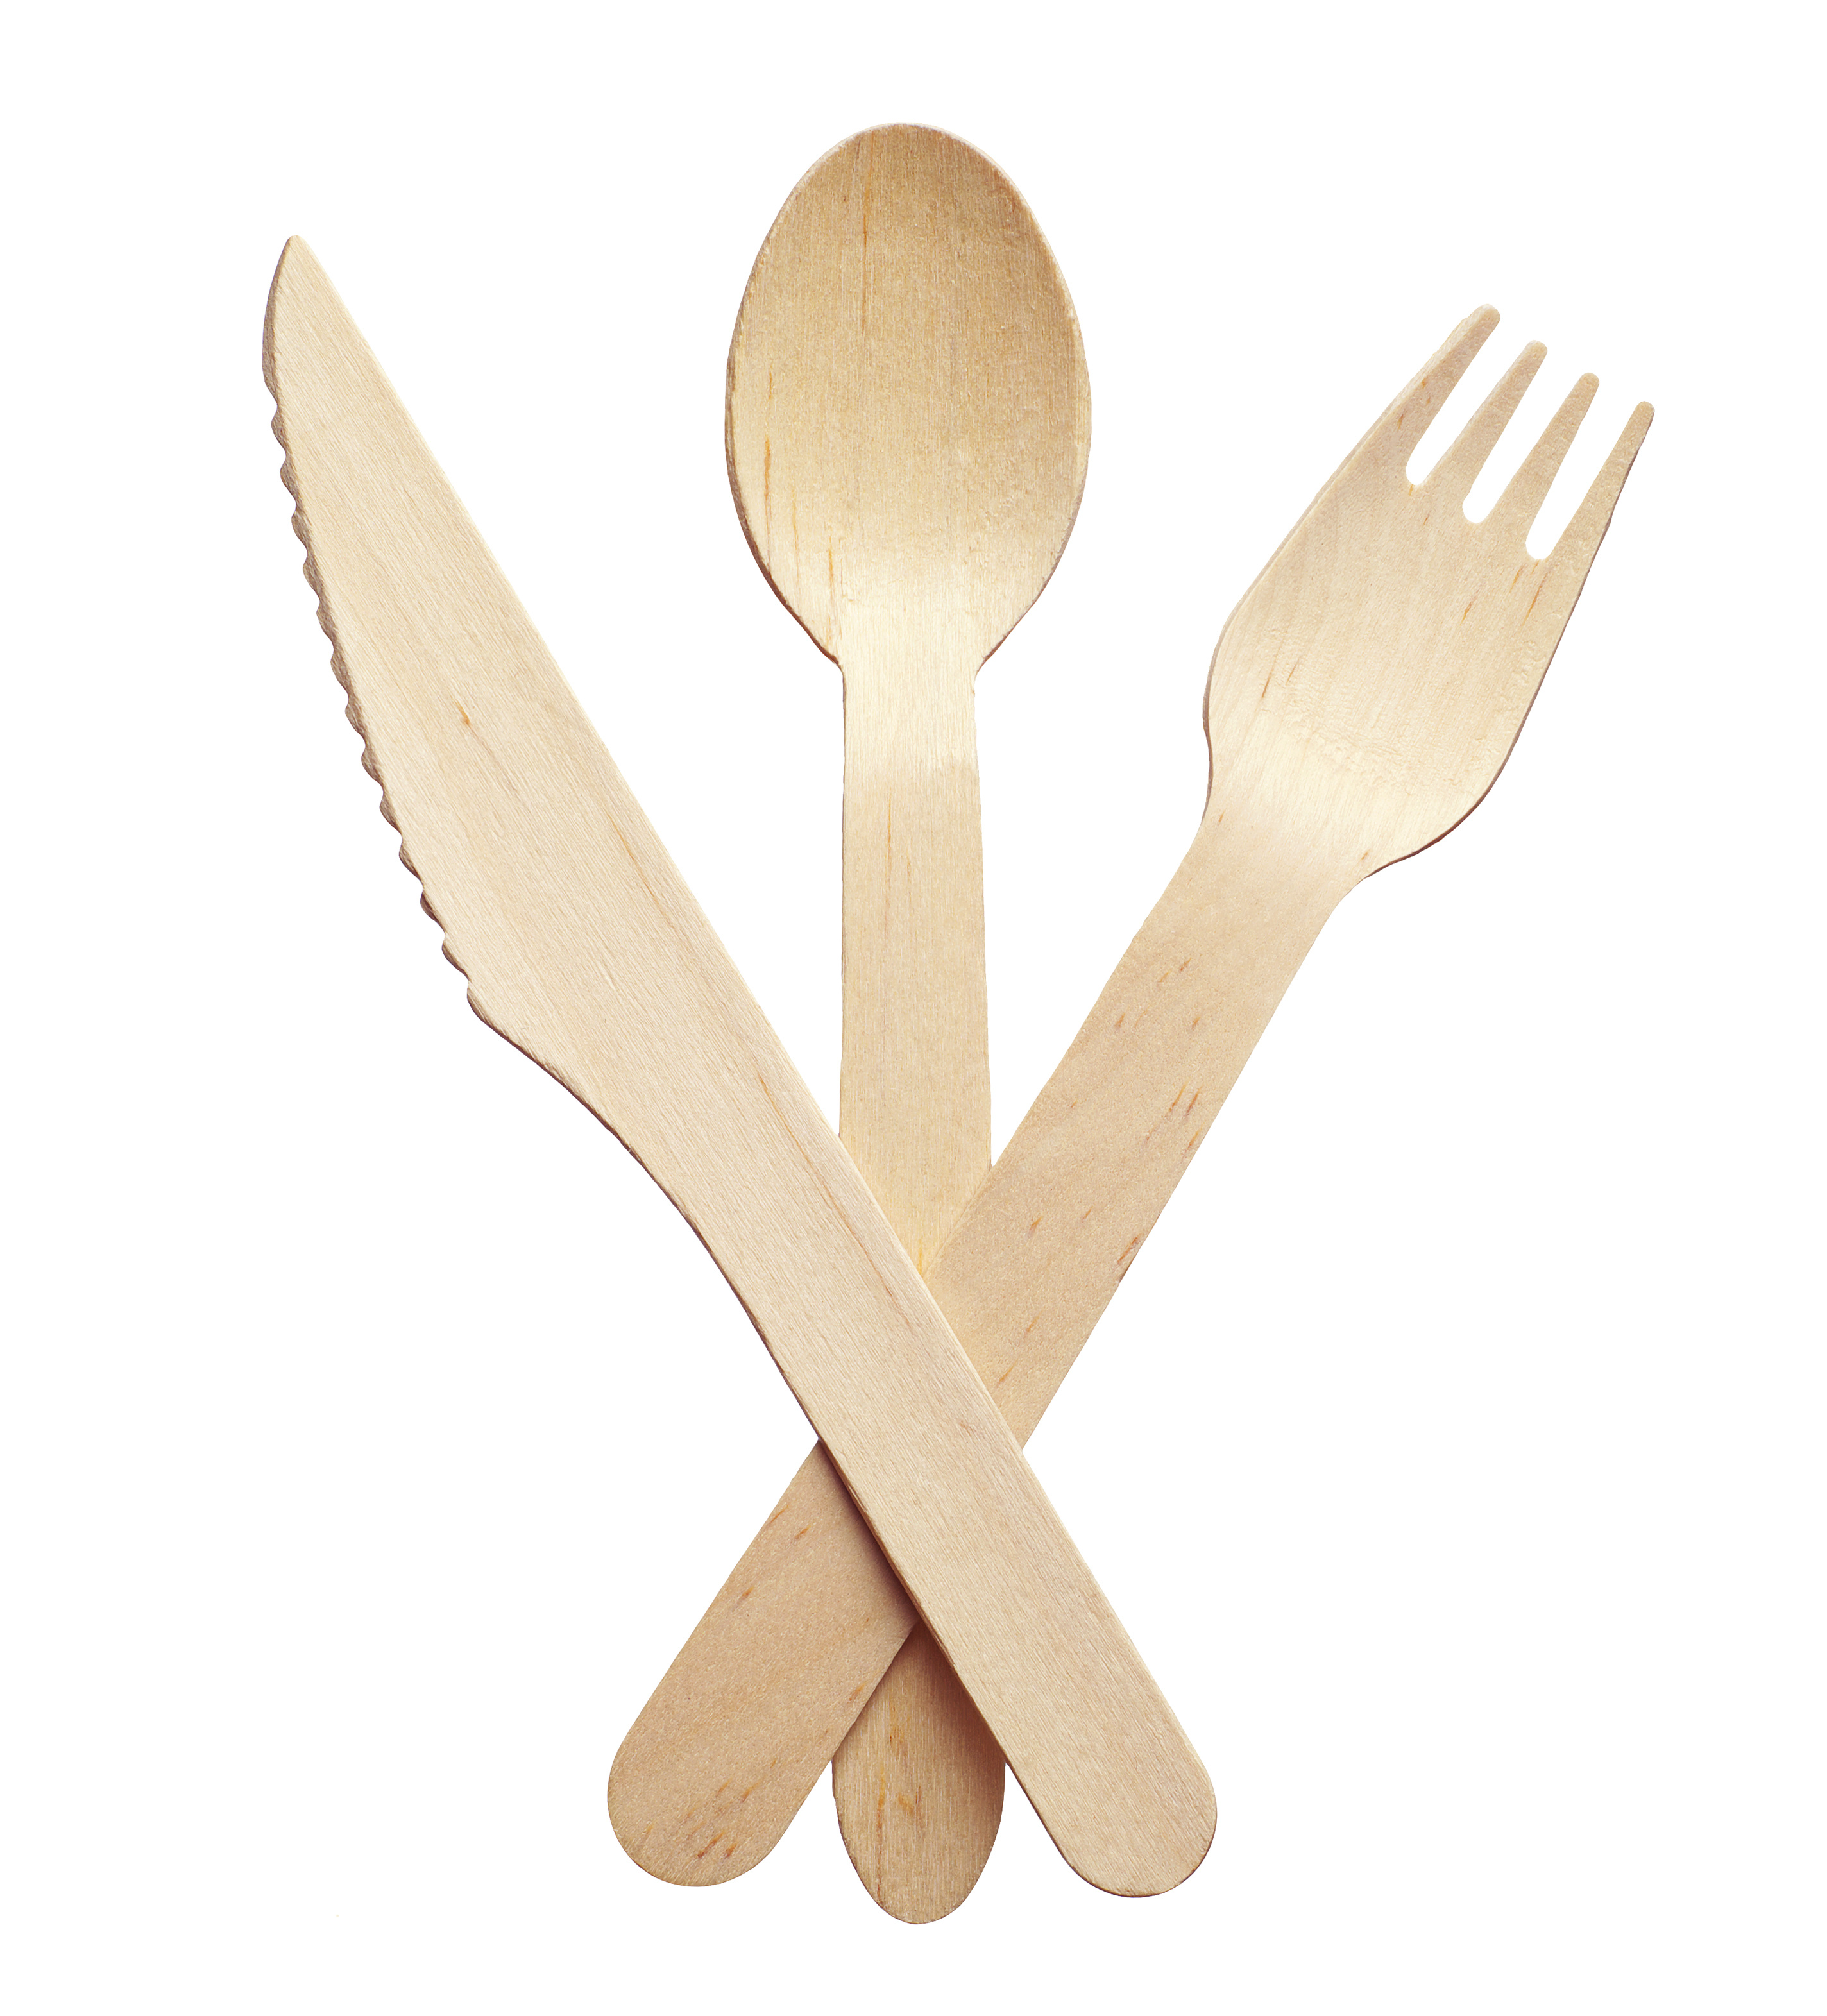 6" Wood Cutlery Spoons Case of 10,000ct (Item# Green Spoon 158)